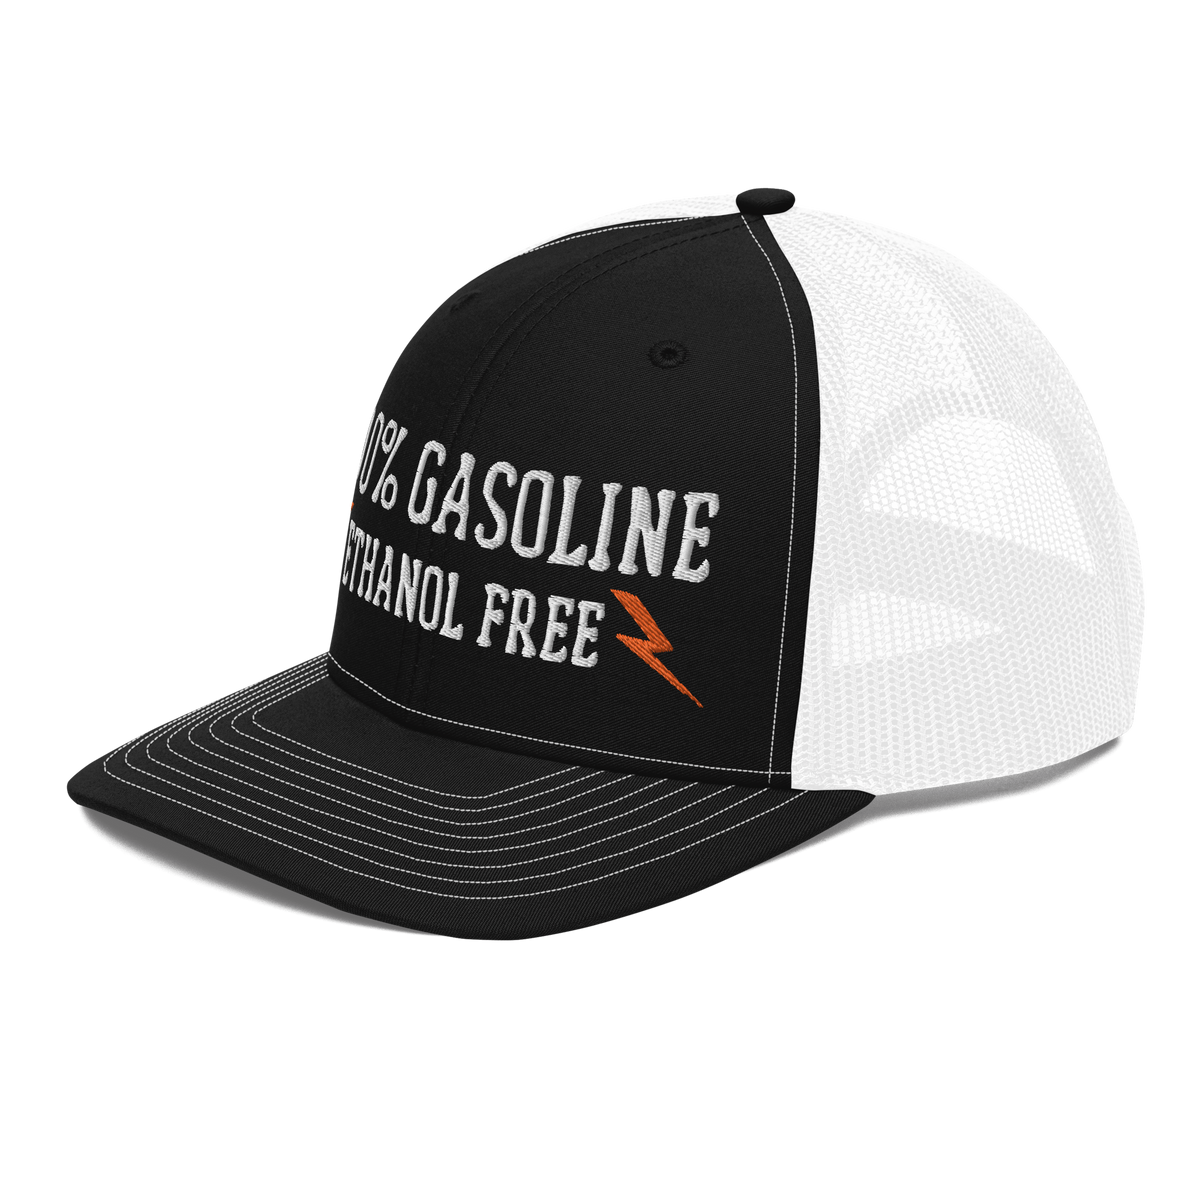 100% Gasoline